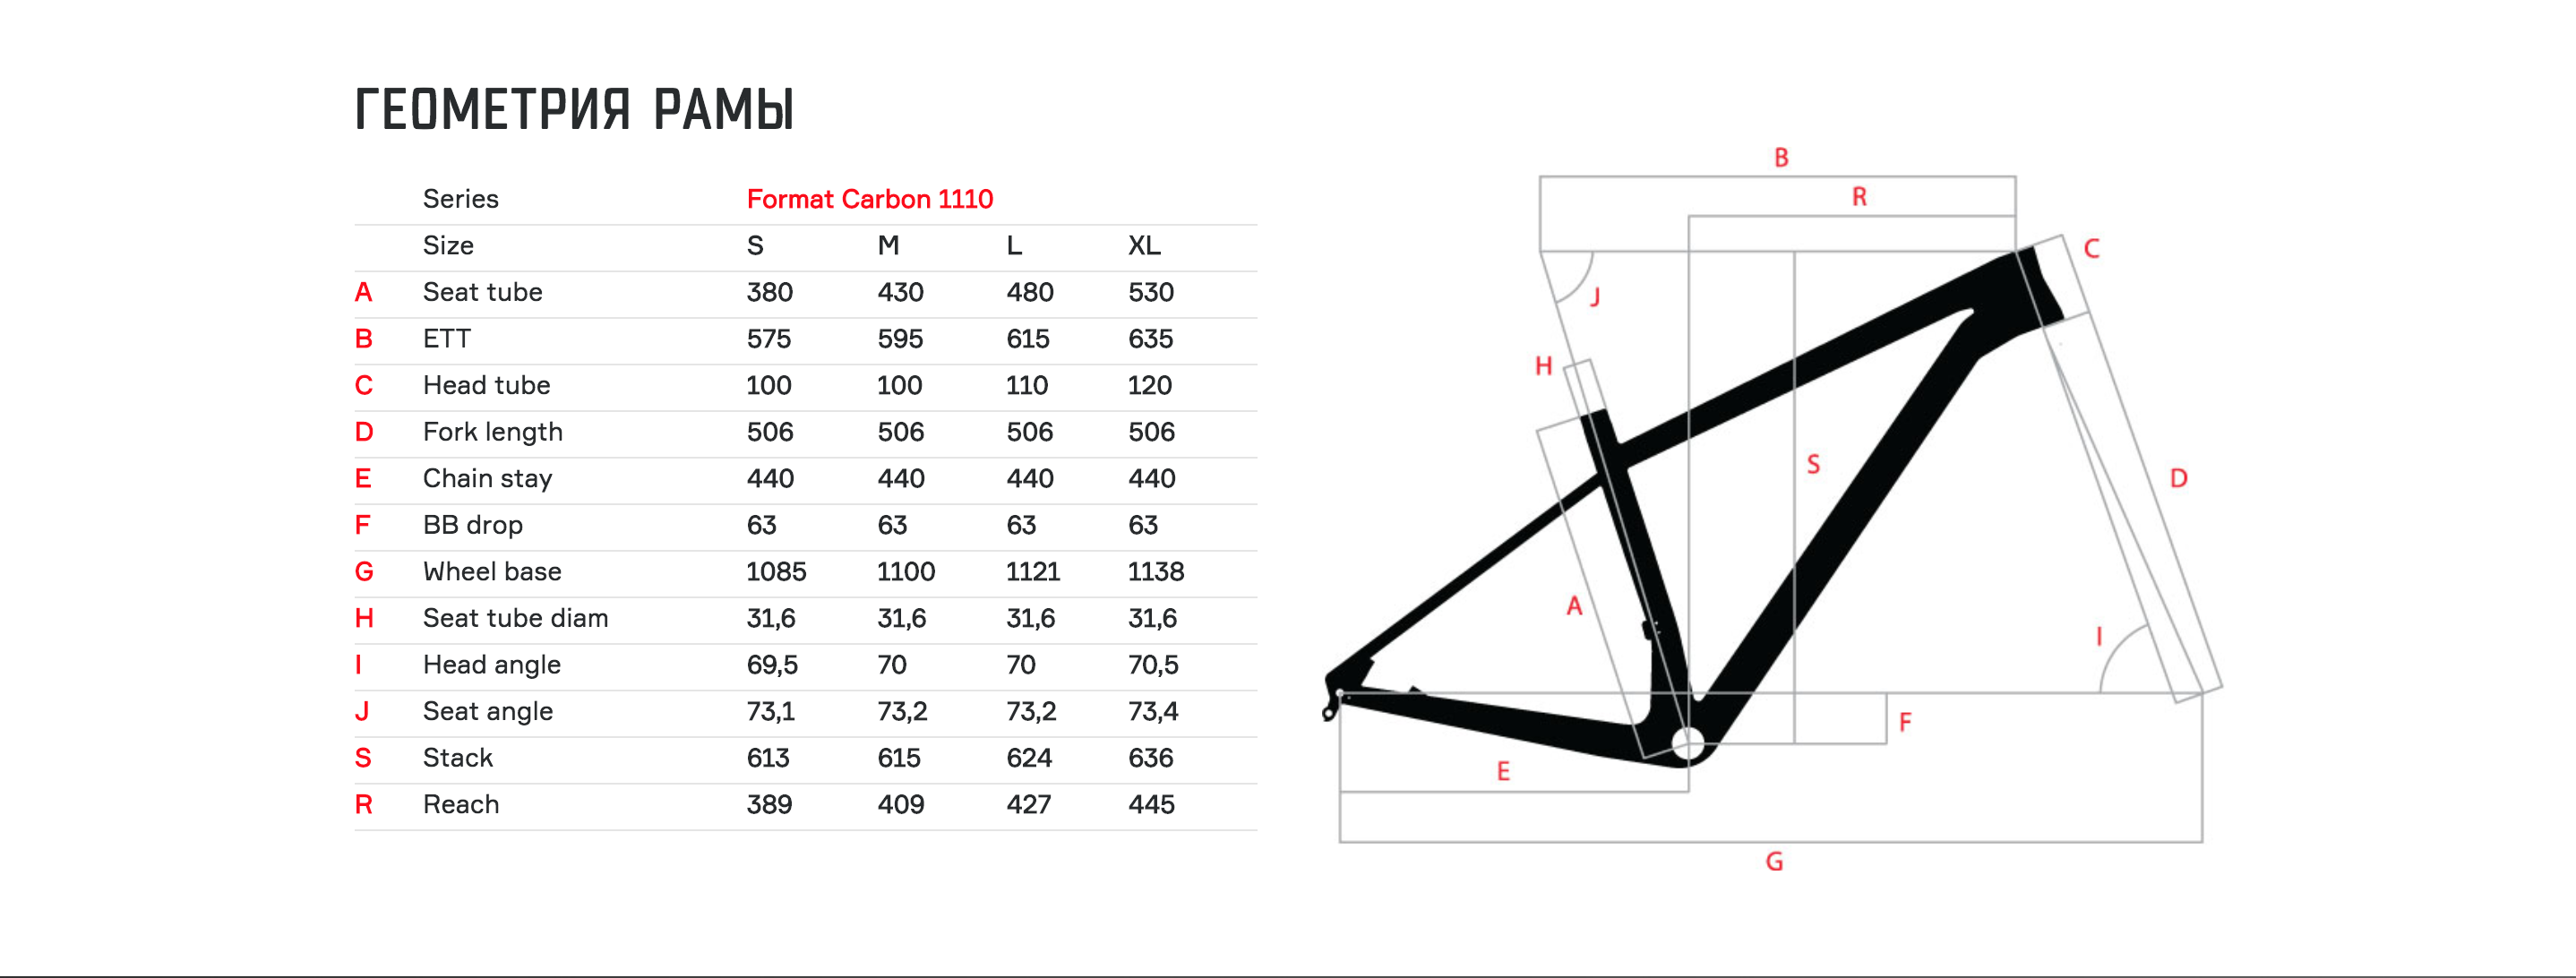 Материал рамы велосипеда. Gt Avalanche 26 ростовка рамы. Размер рамы Norco 15”. Размер рамы Norco 54. Велосипед Cannondale ростовка рама 19.